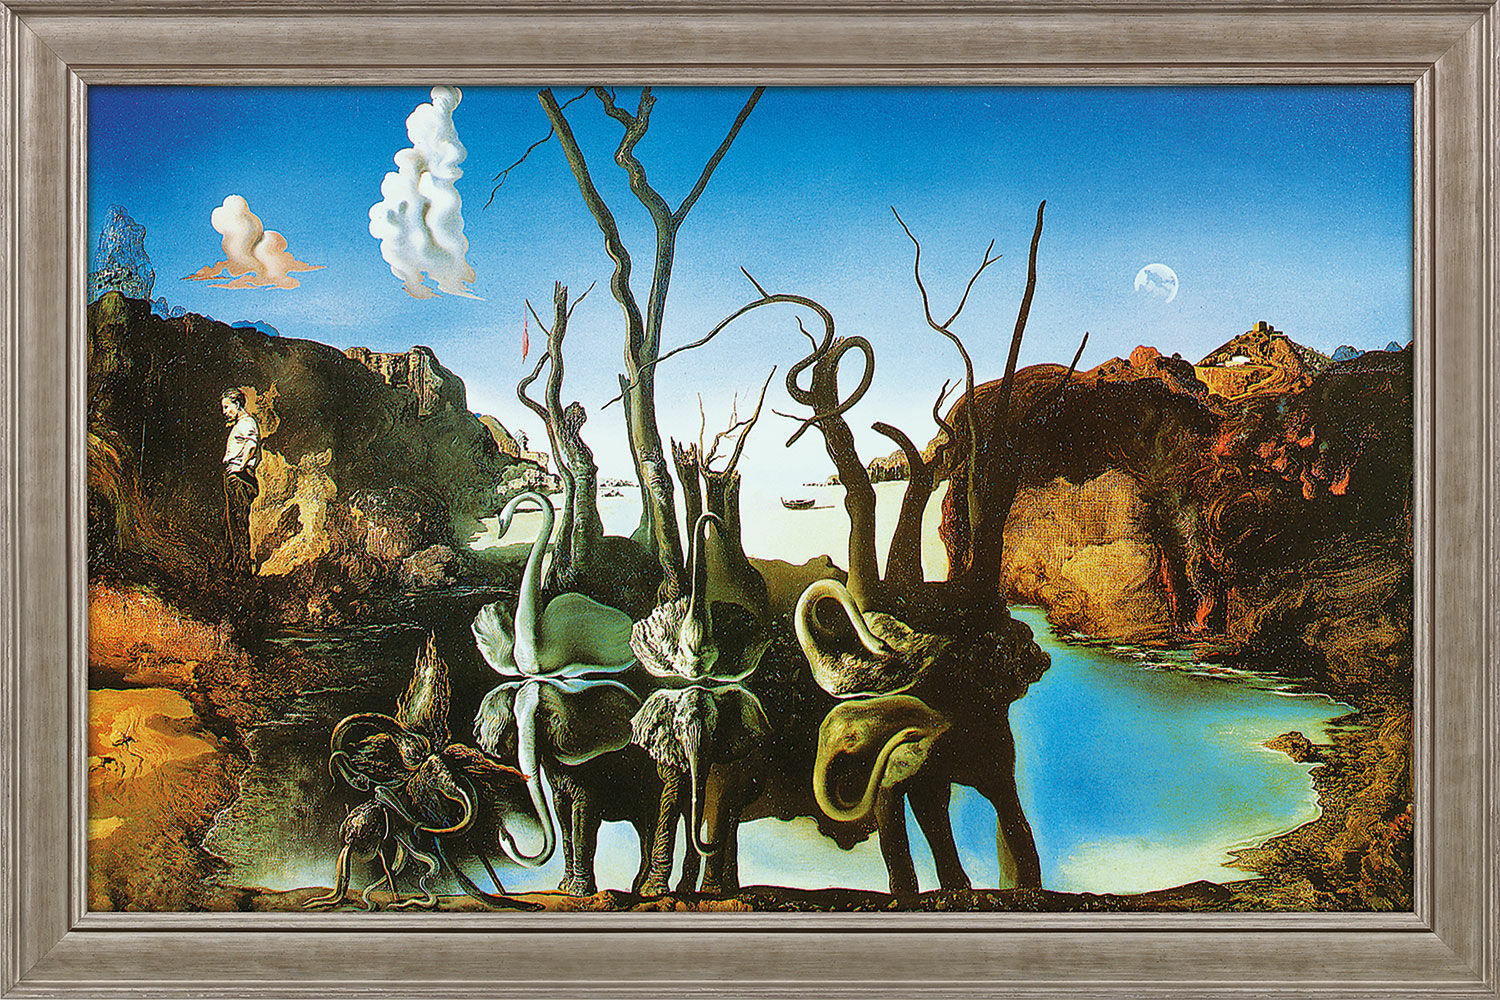 Picture "Swans Reflect Elephants" (1937), framed by Salvador Dalí